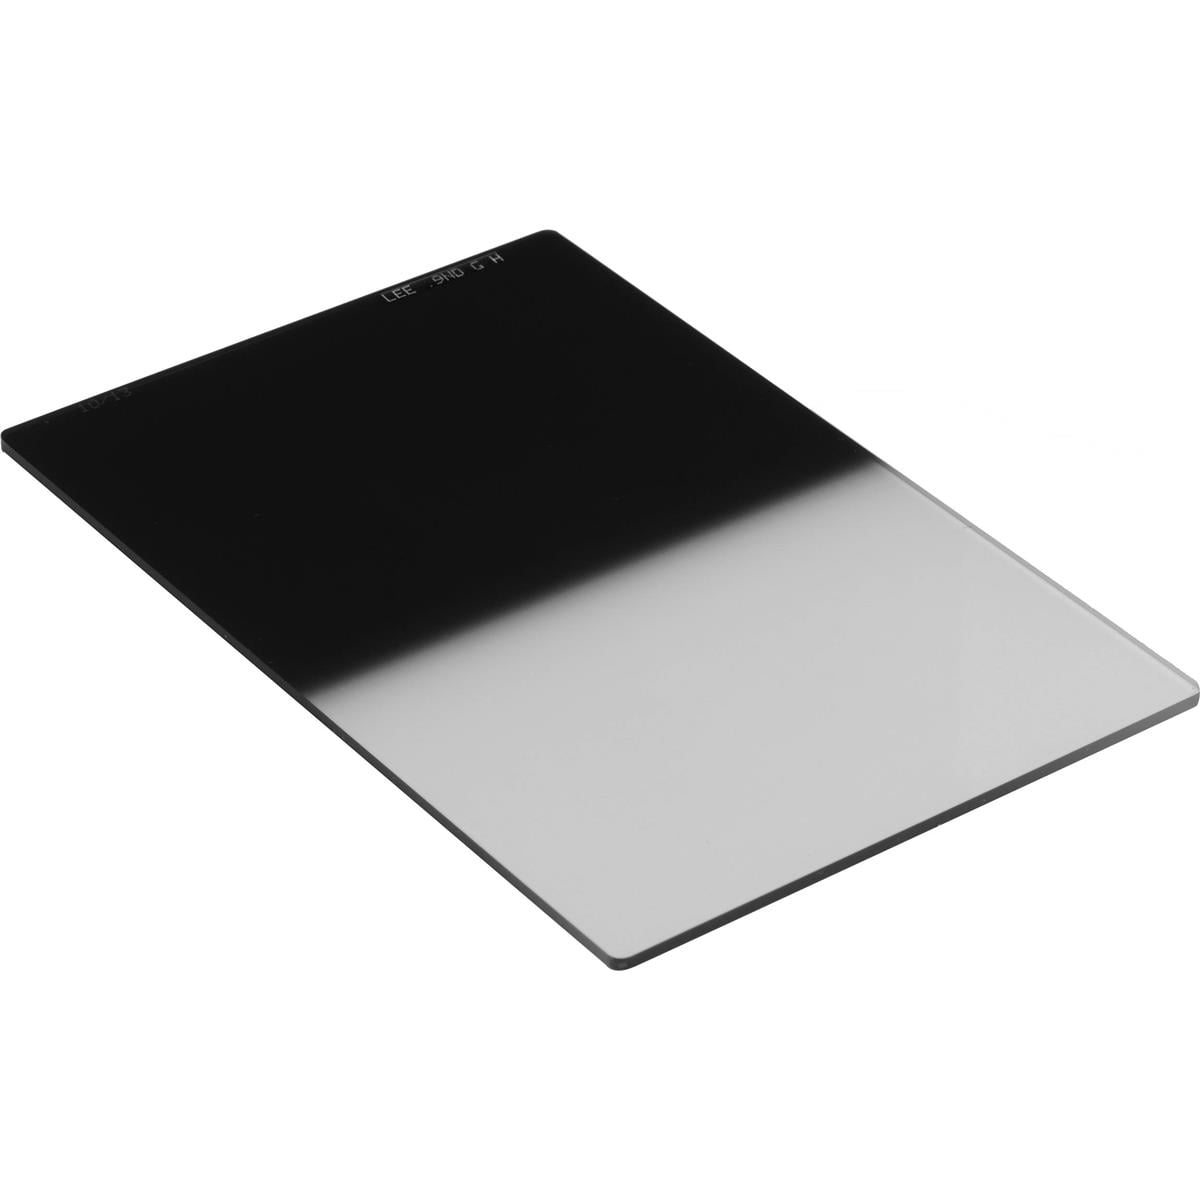 Resin Filter Lee Filters-ND Grad 0.9 Soft Edge 100x150mm Neutral Density Grad 